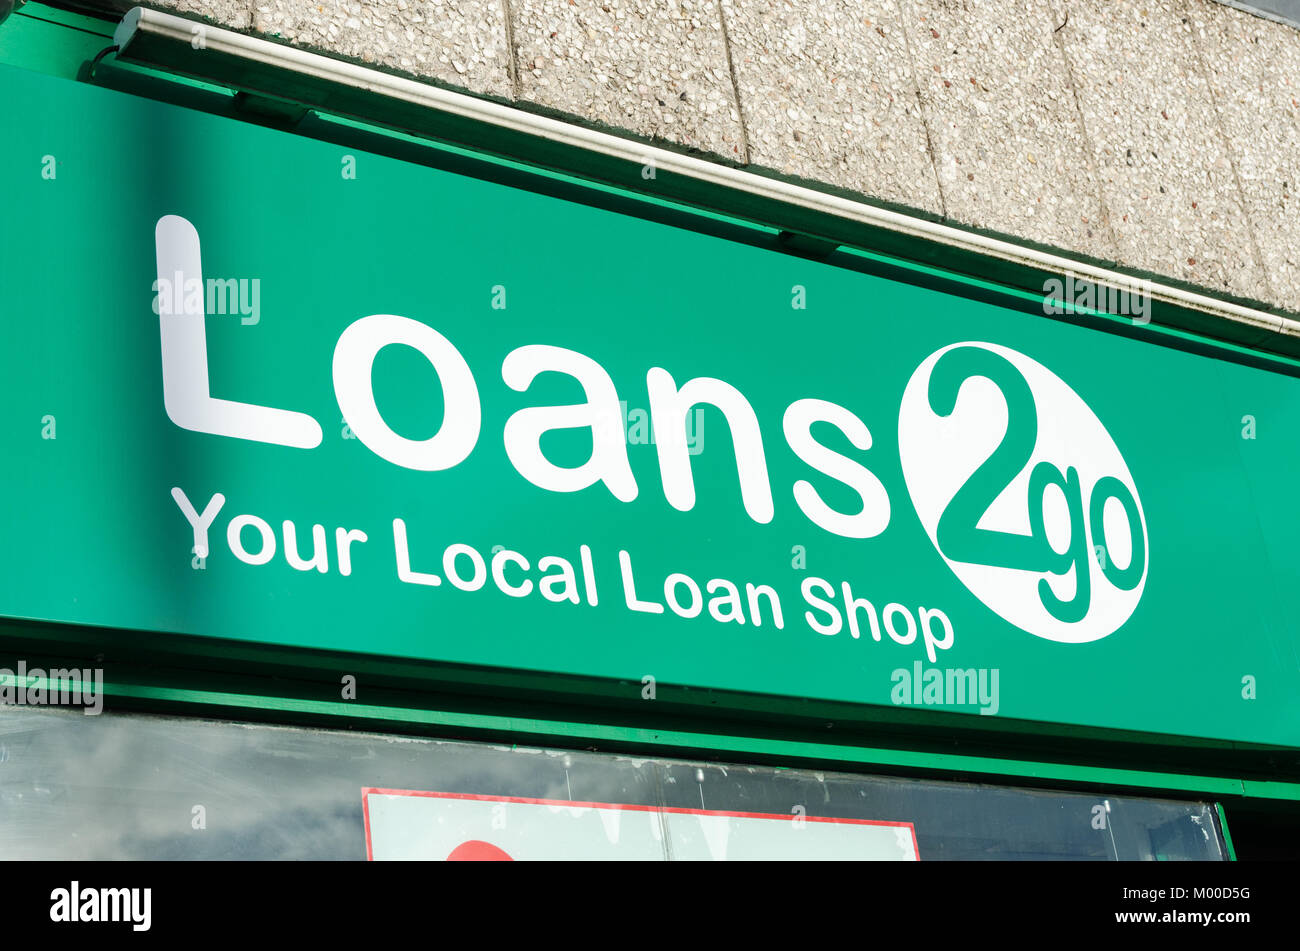 Loans 2go local loan shop in Wolverhampton, UK Stock Photo